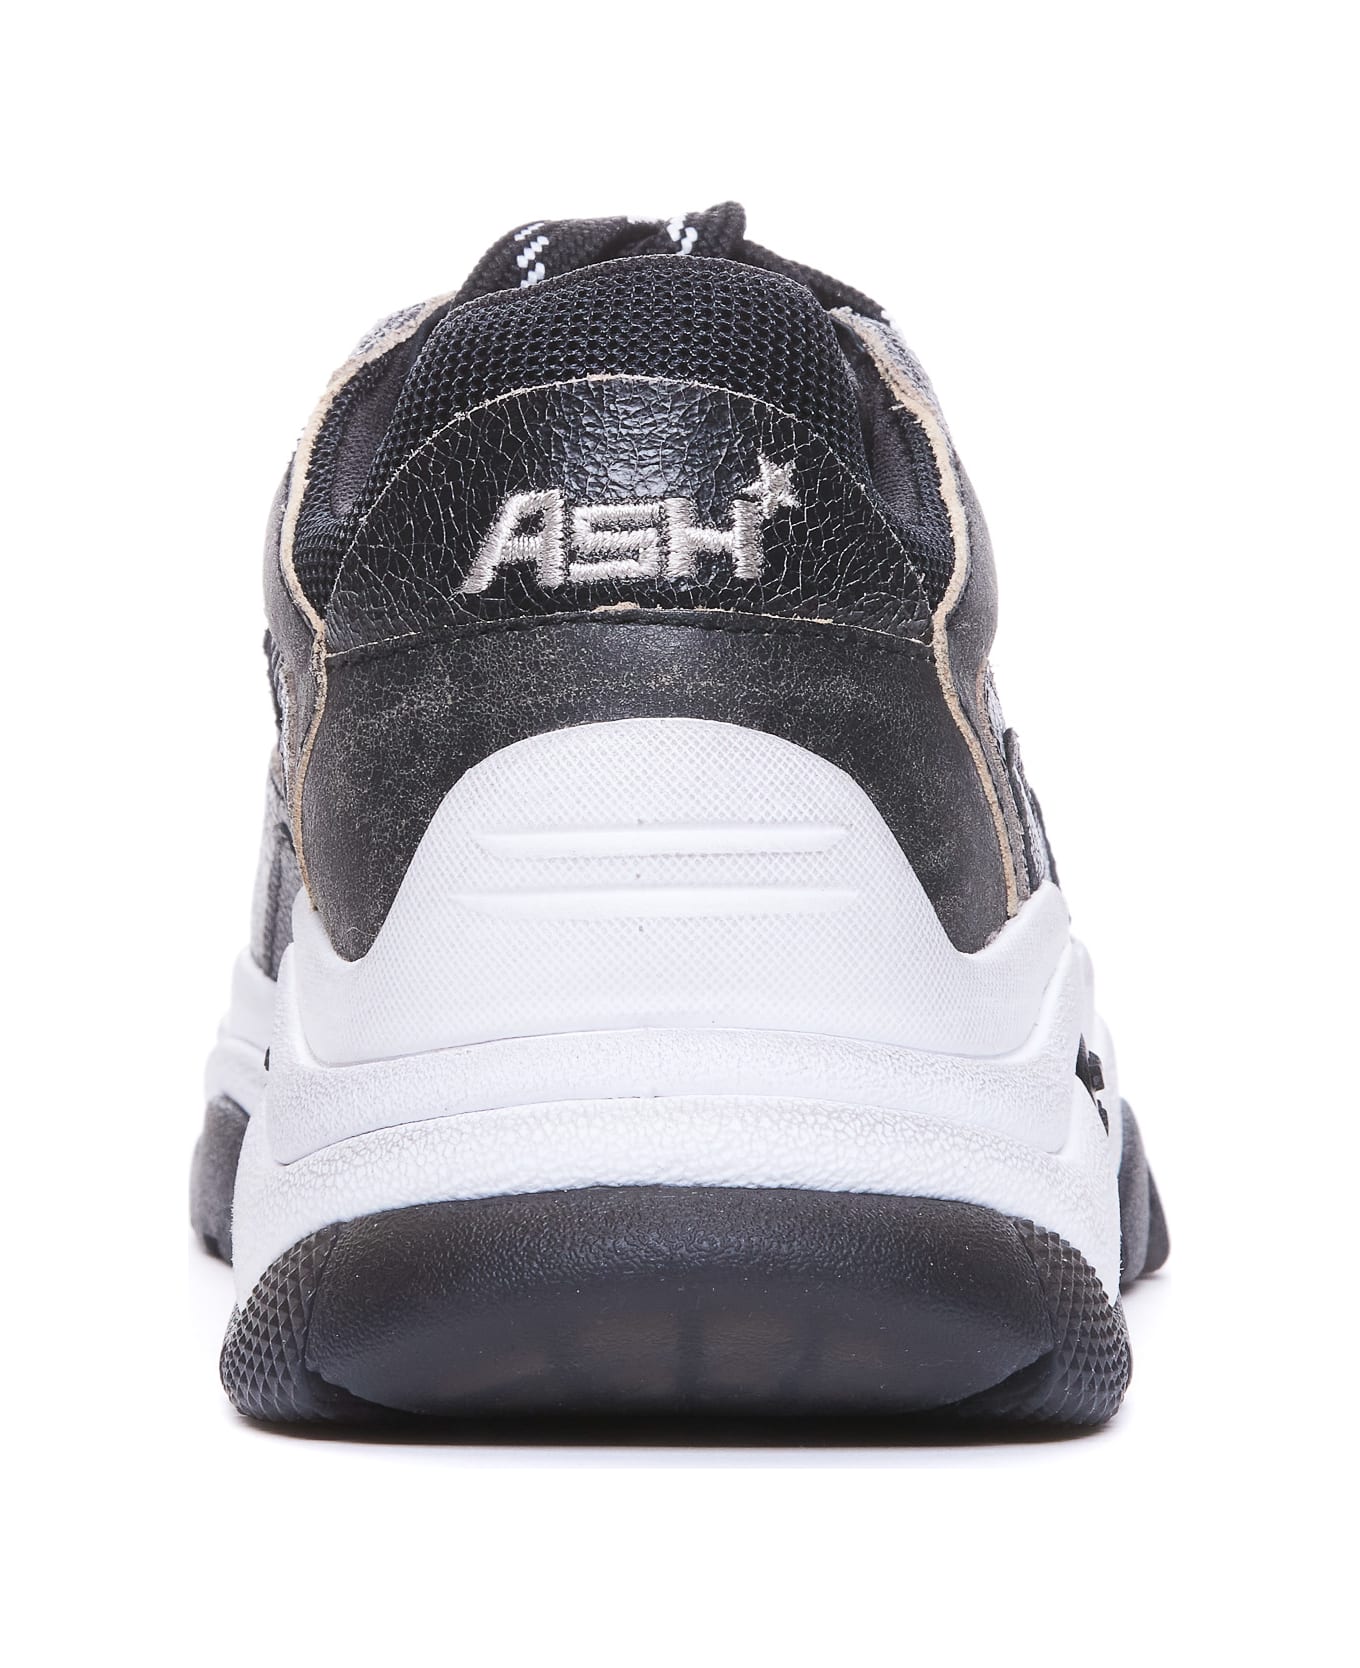 Ash Addict Sneakers - Black